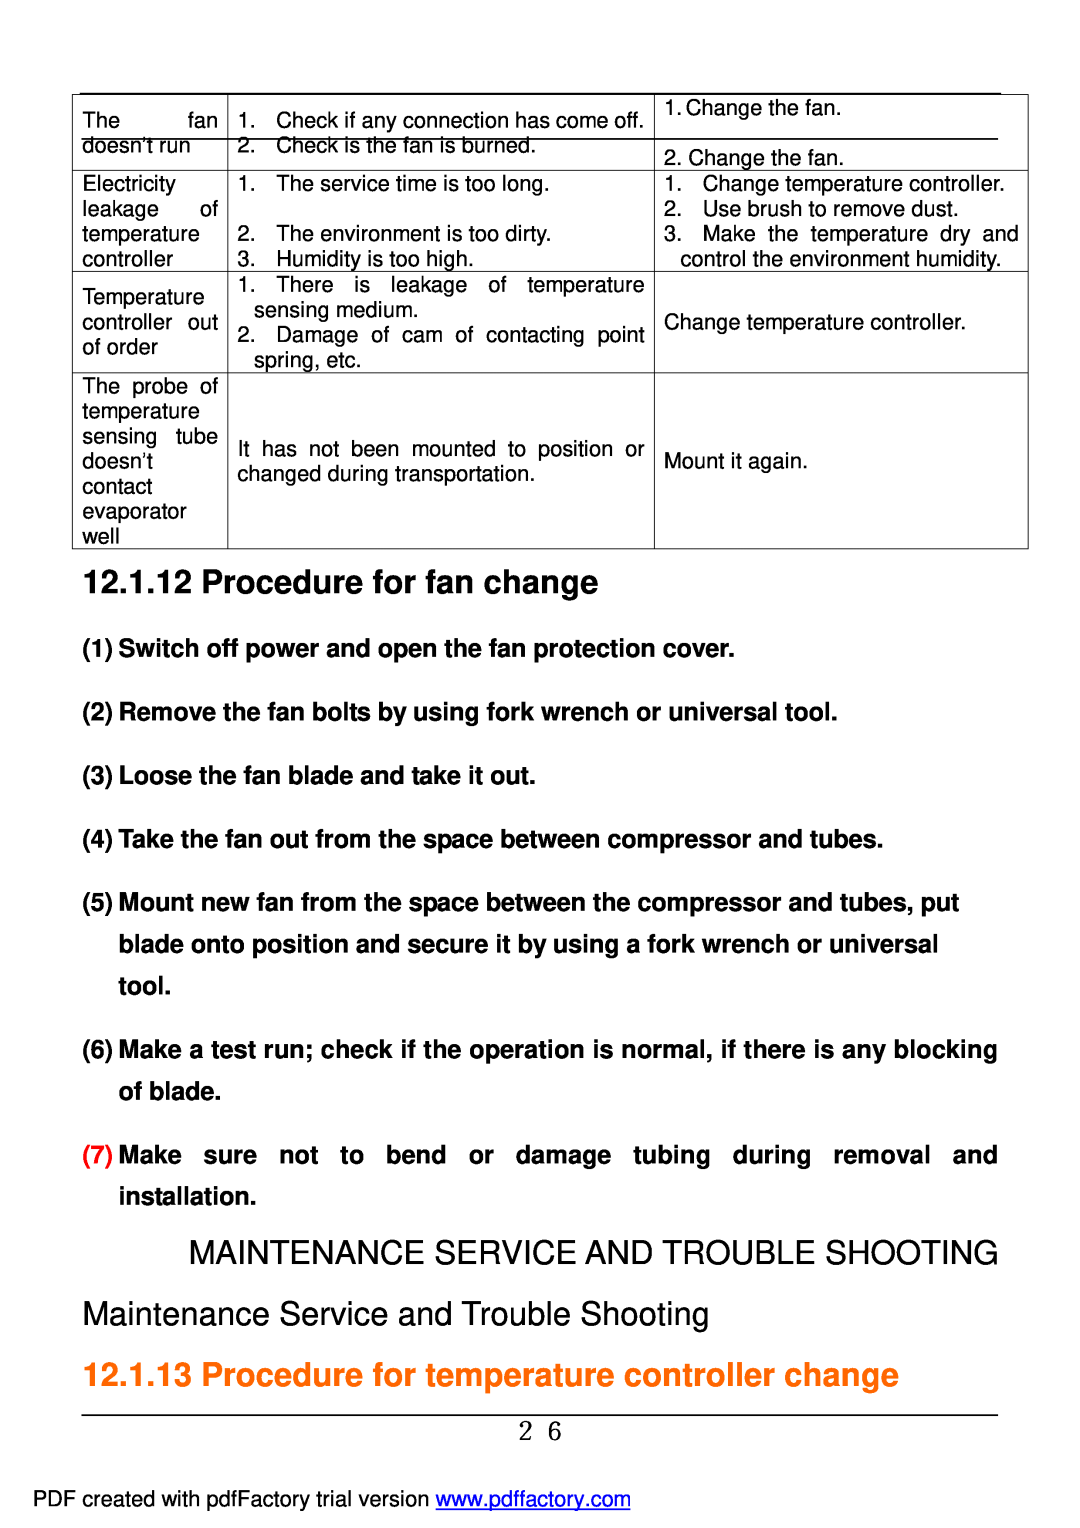 Haier BD-478A Procedure for fan change, Maintenance Service And Trouble Shooting, Maintenance Service and Trouble Shooting 